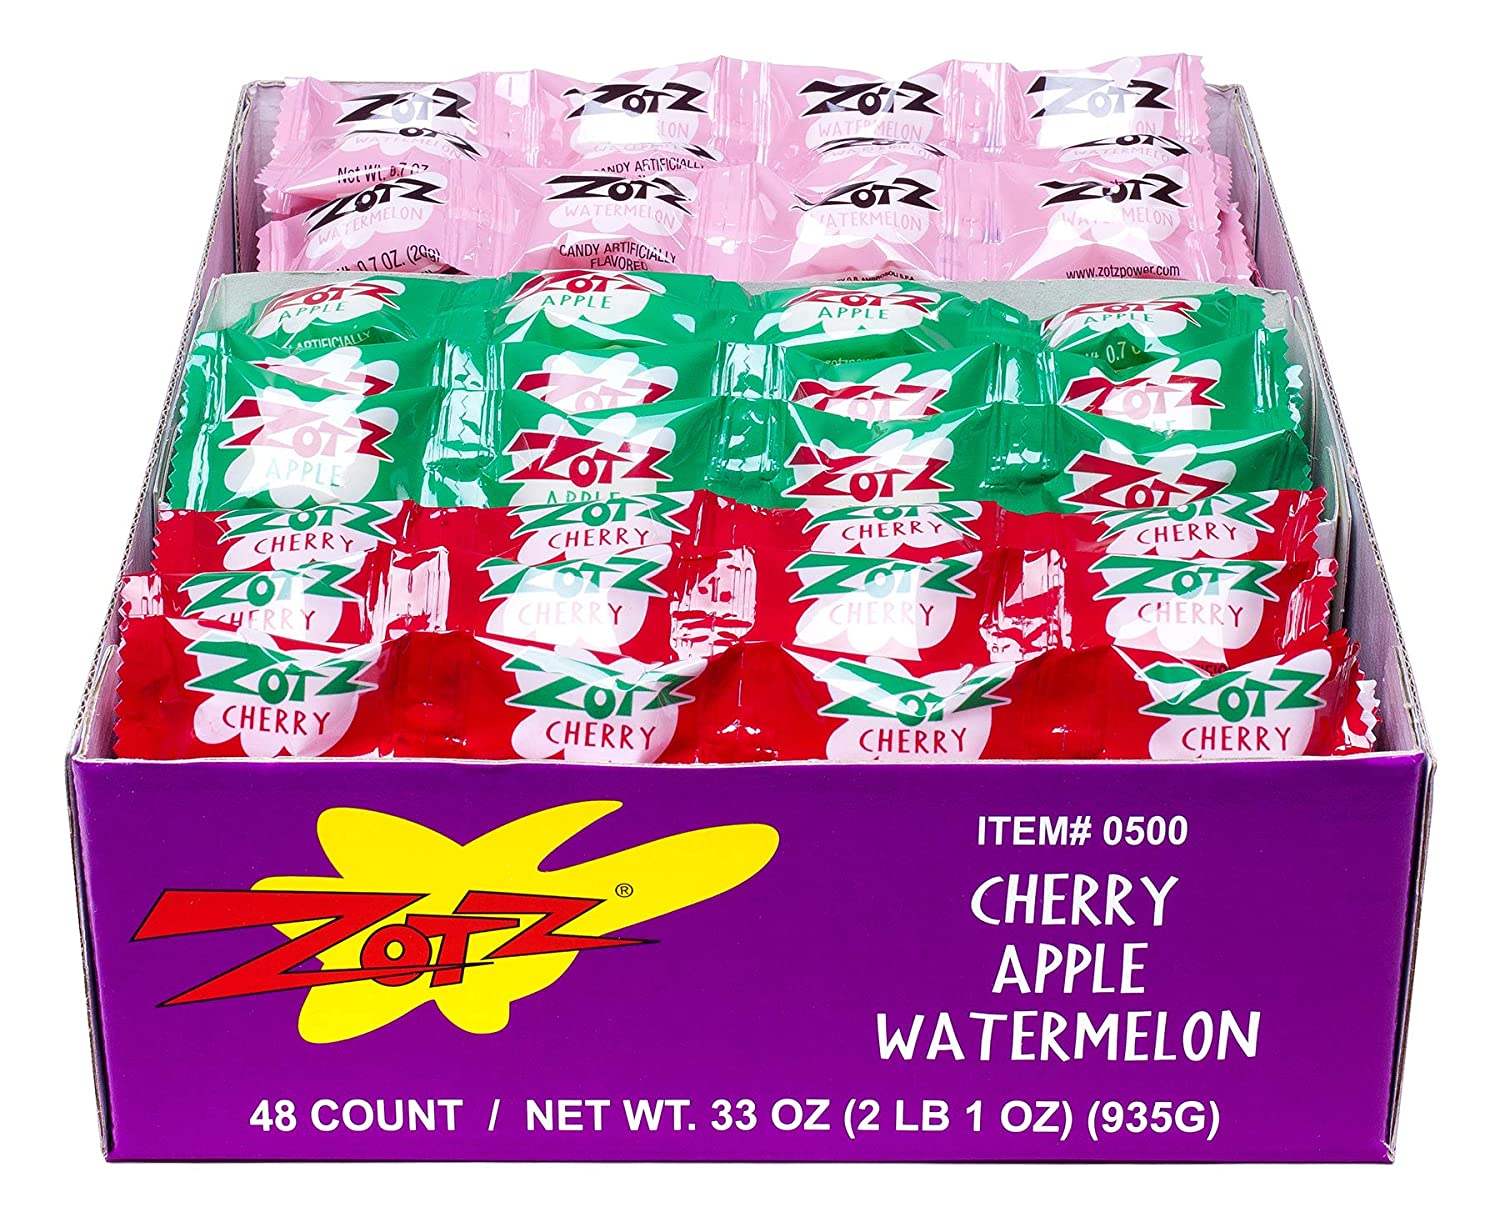 Zotz Fizz Power Candy, 5 lb, Assorted Flavors